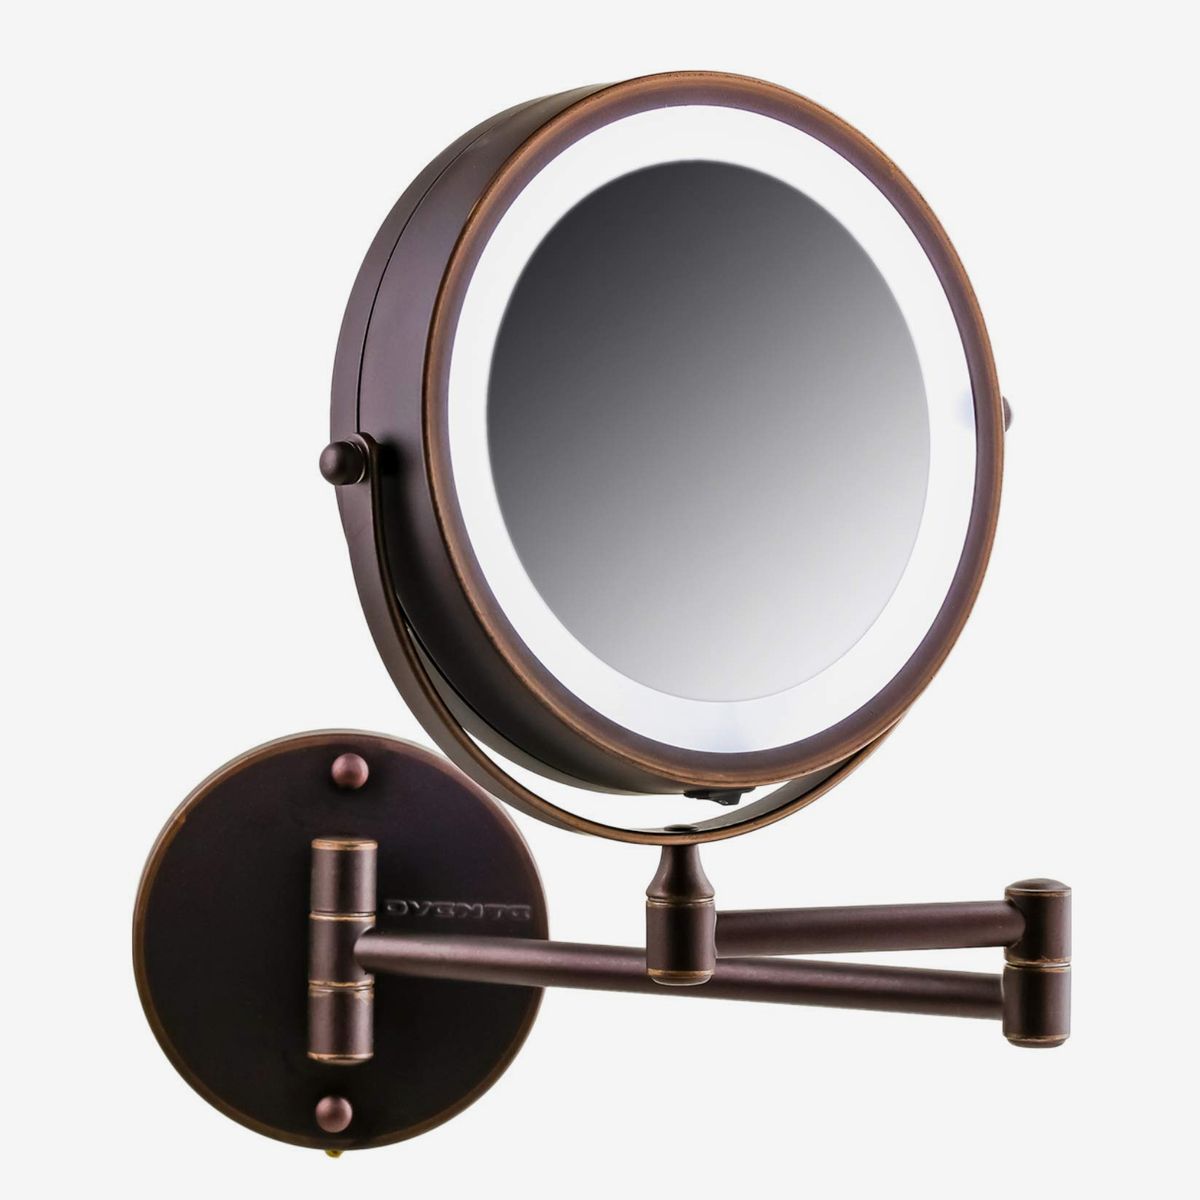 14 Best Lighted Makeup Mirrors 2021, Wall Mount Makeup Mirror 10x